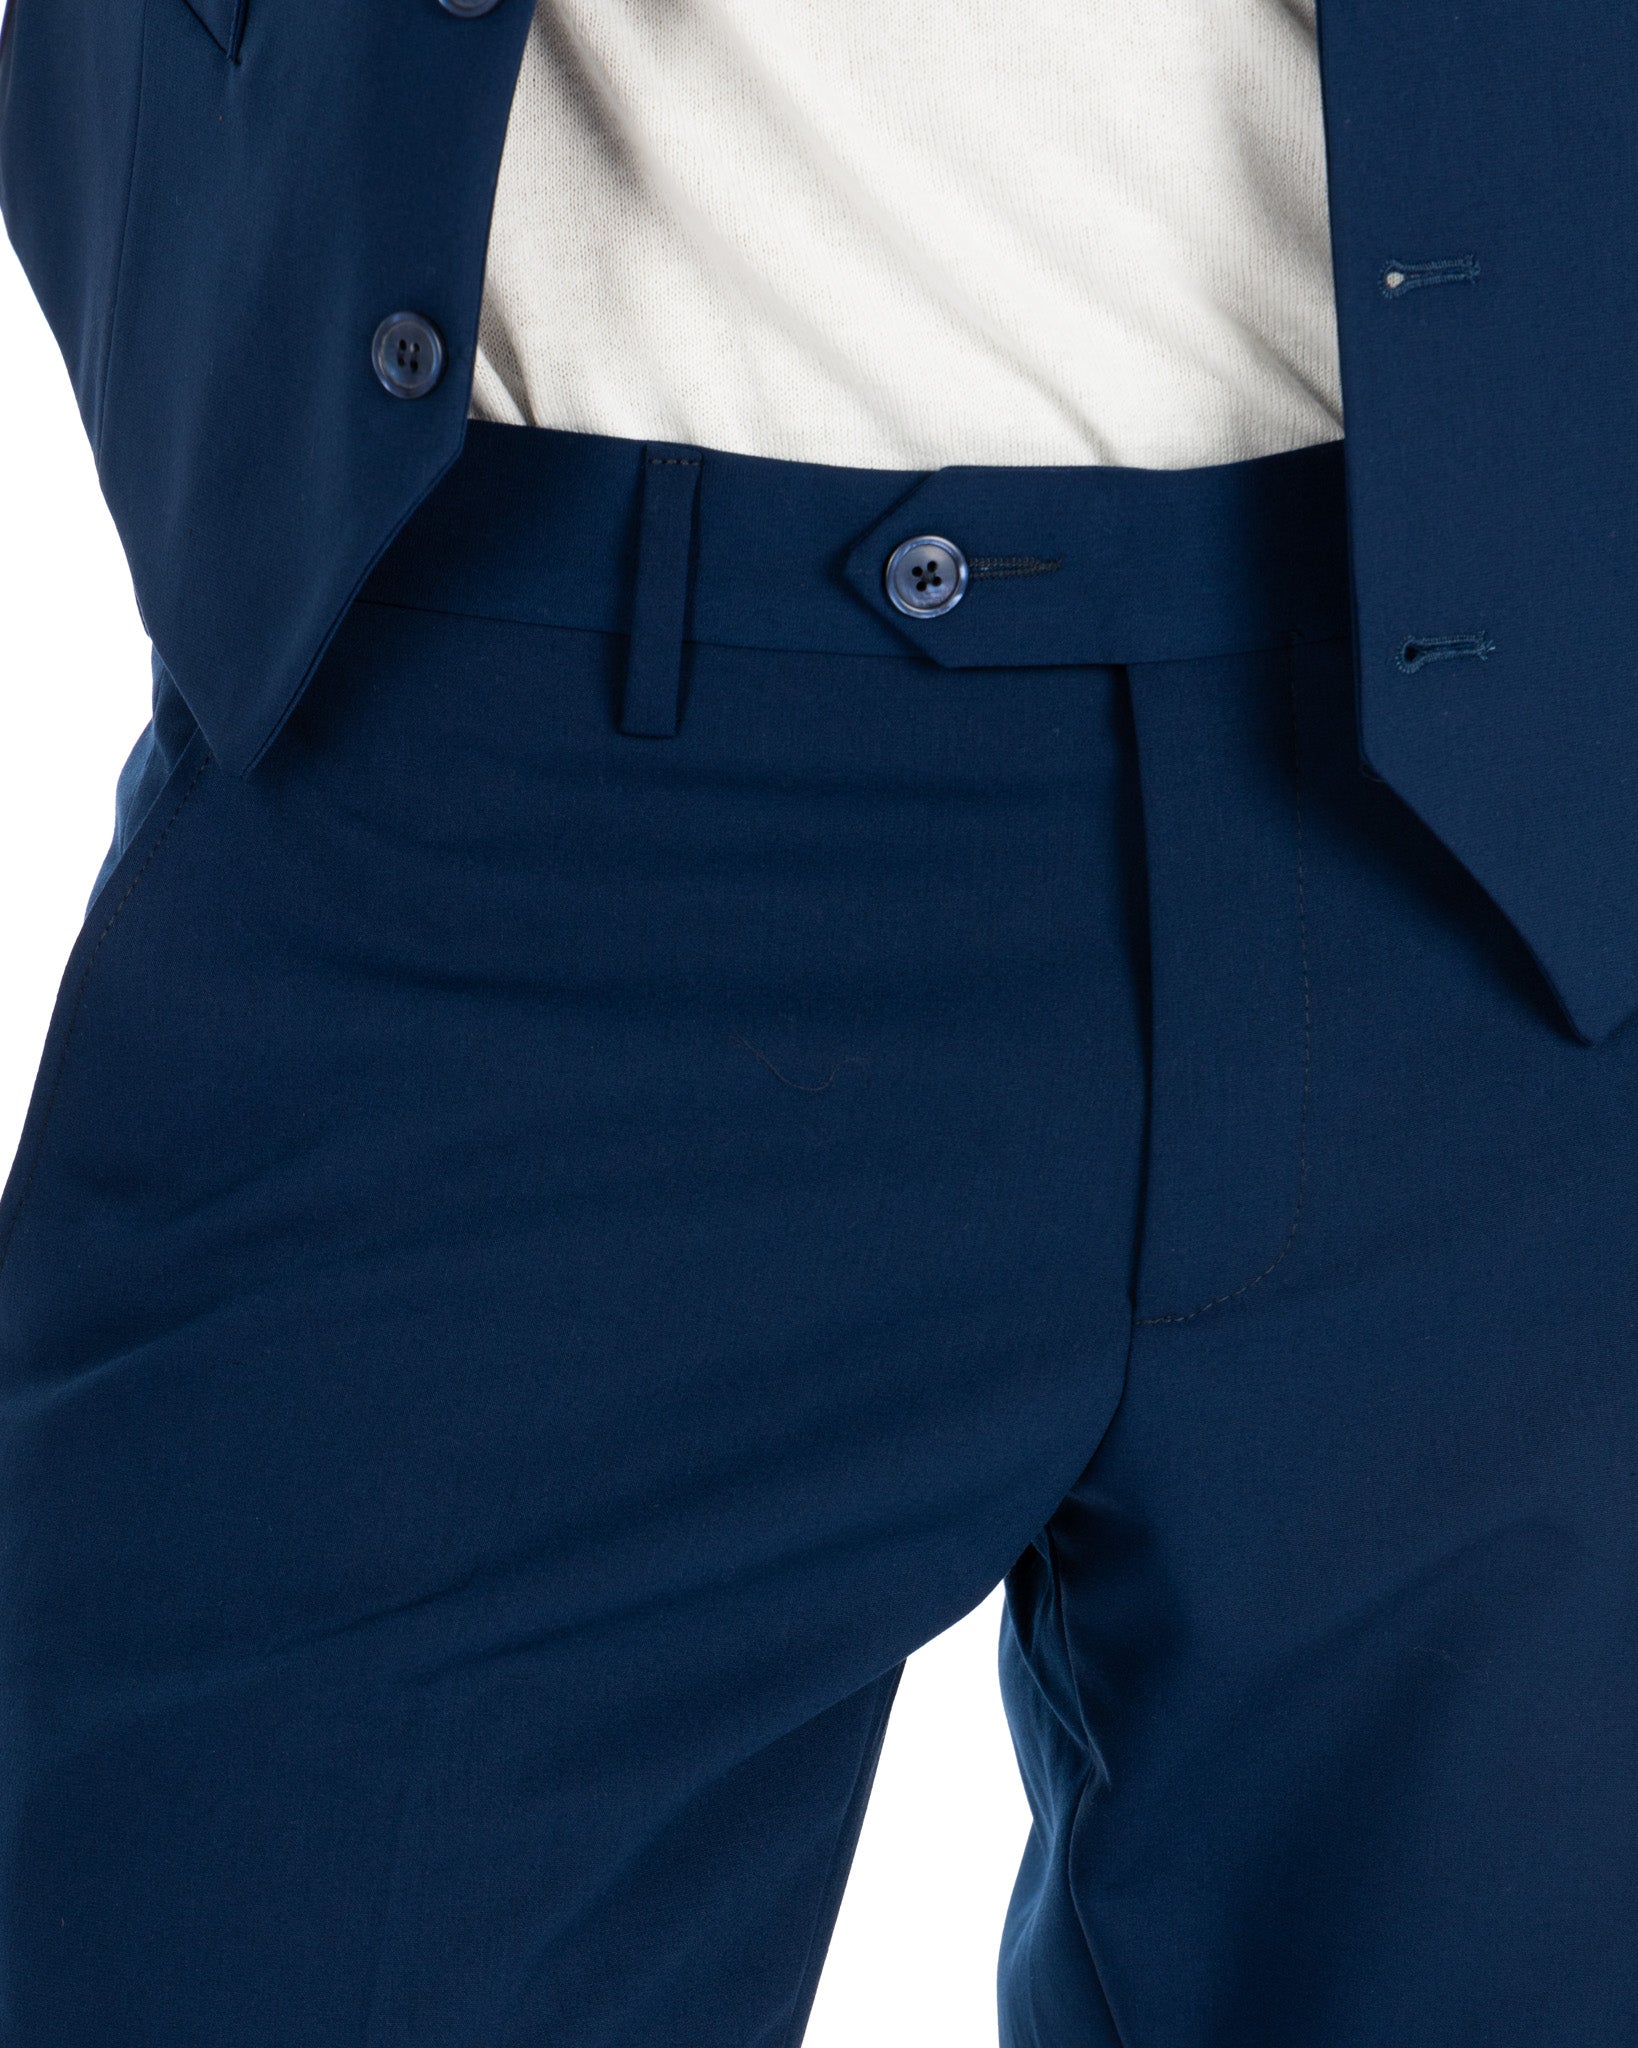 Brema - pantalon basique bleu